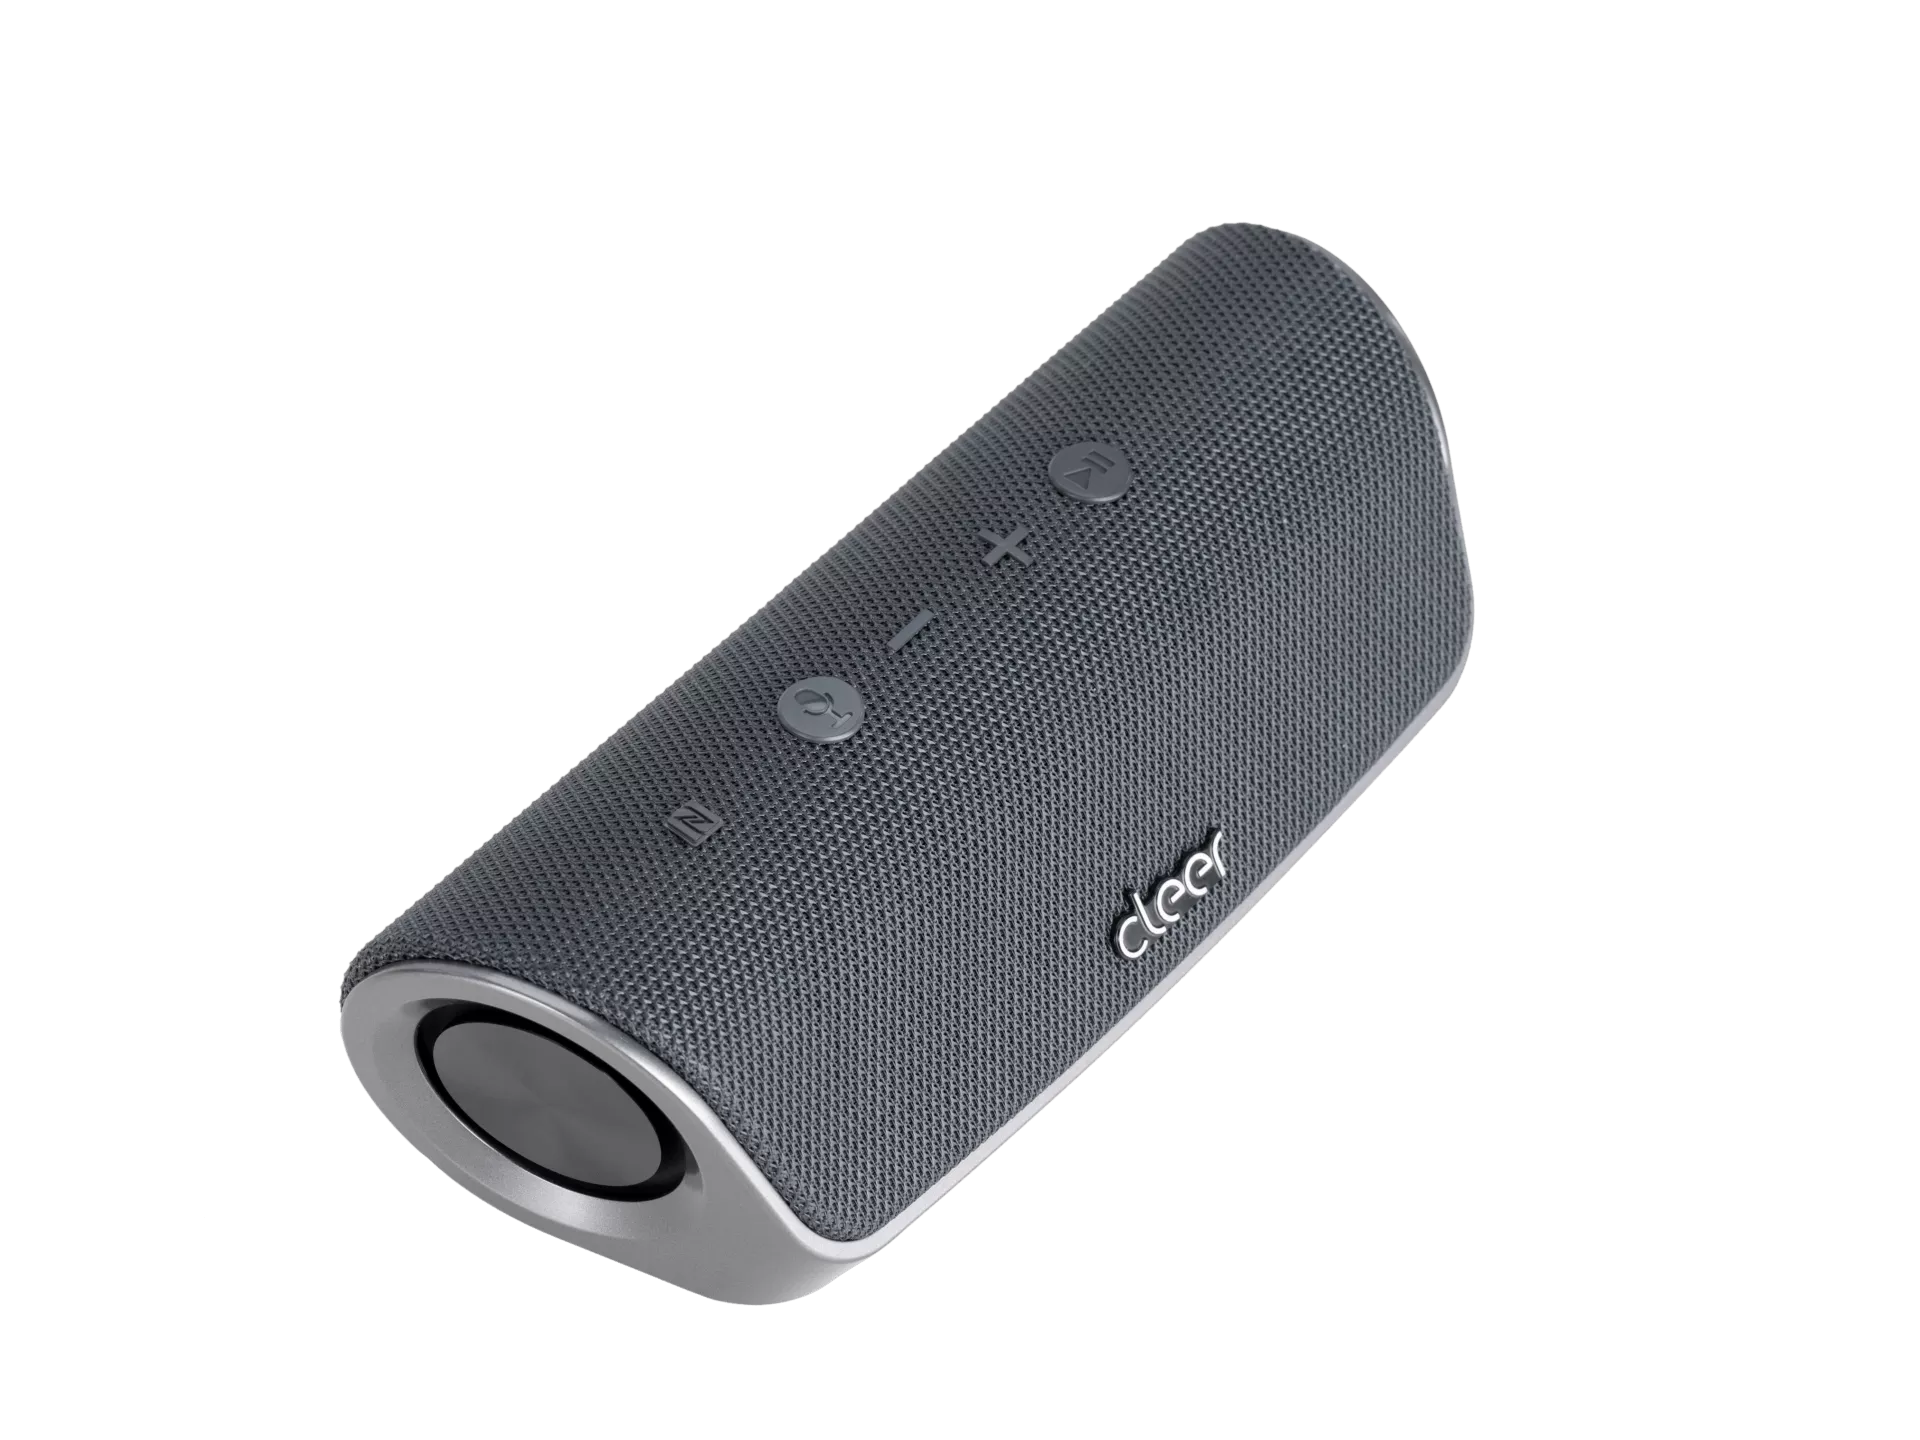 Cleer Scene - Water Resistant Wireless Bluetooth Speaker